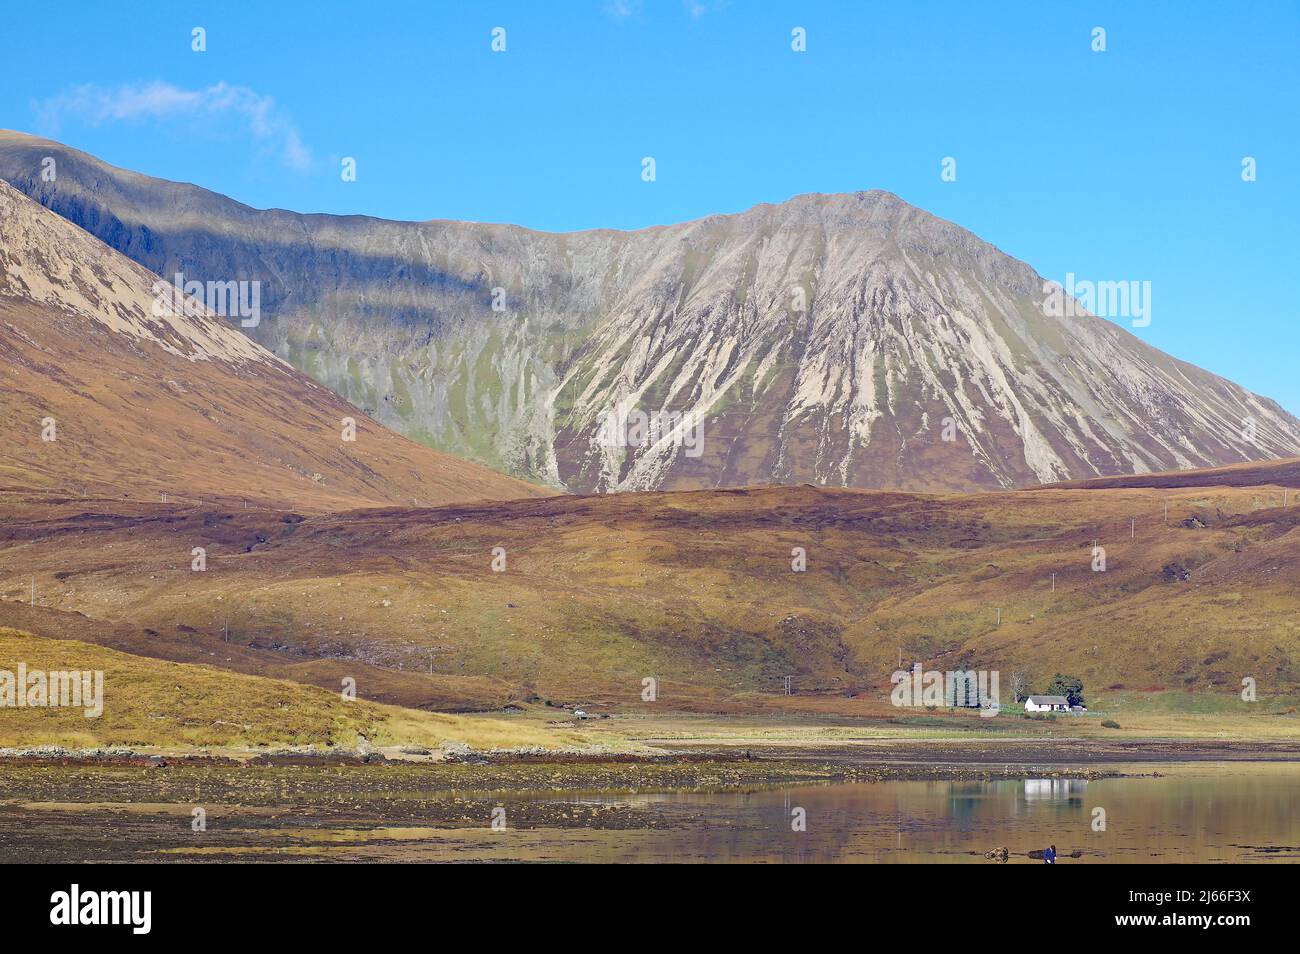 Kleines Haus am fuss einer rauen, végétationslesen Berglandschaft, Herbst, Cullins, île de Skye, Hebriden, Schottland, GROSSBRITANNIEN Banque D'Images